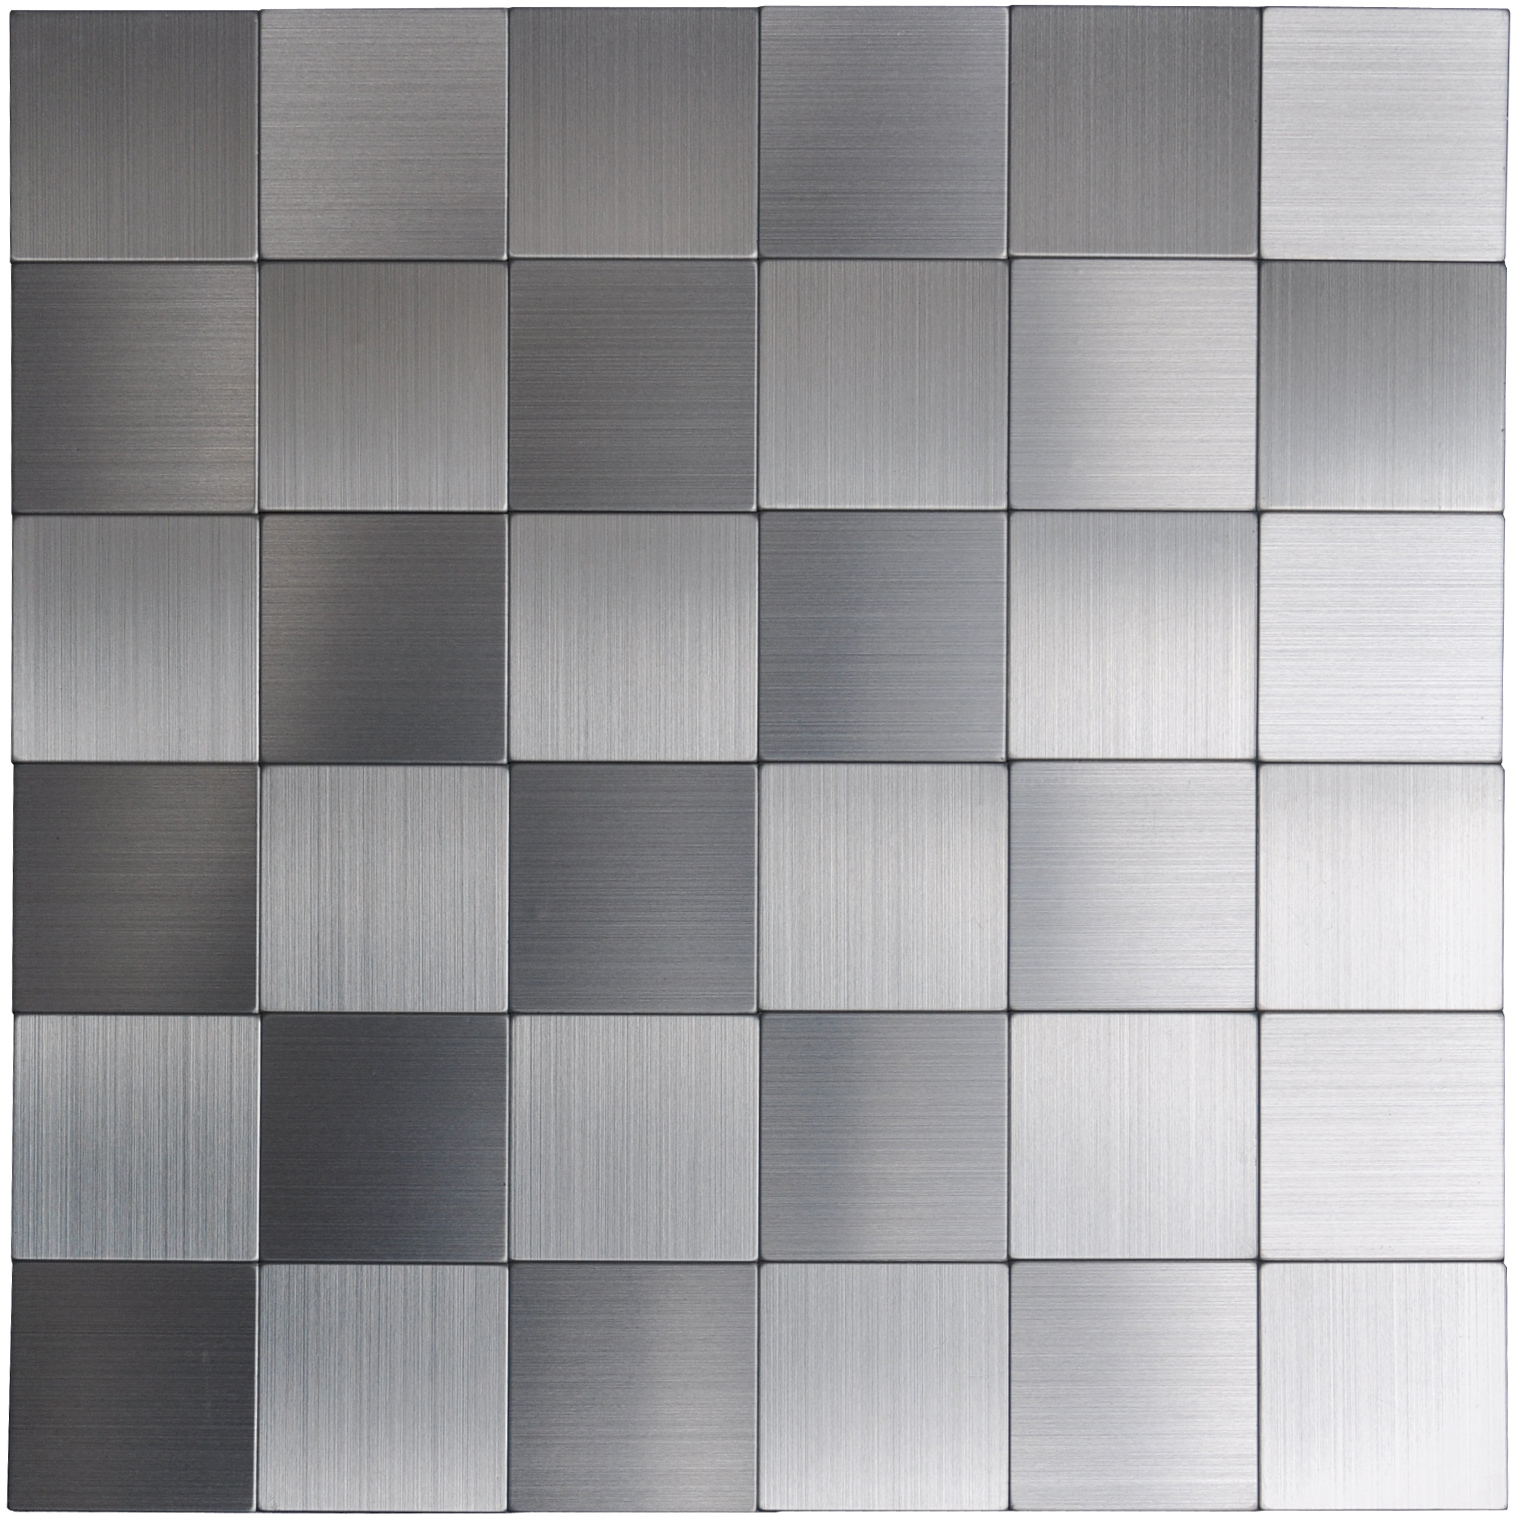 Metalic tile